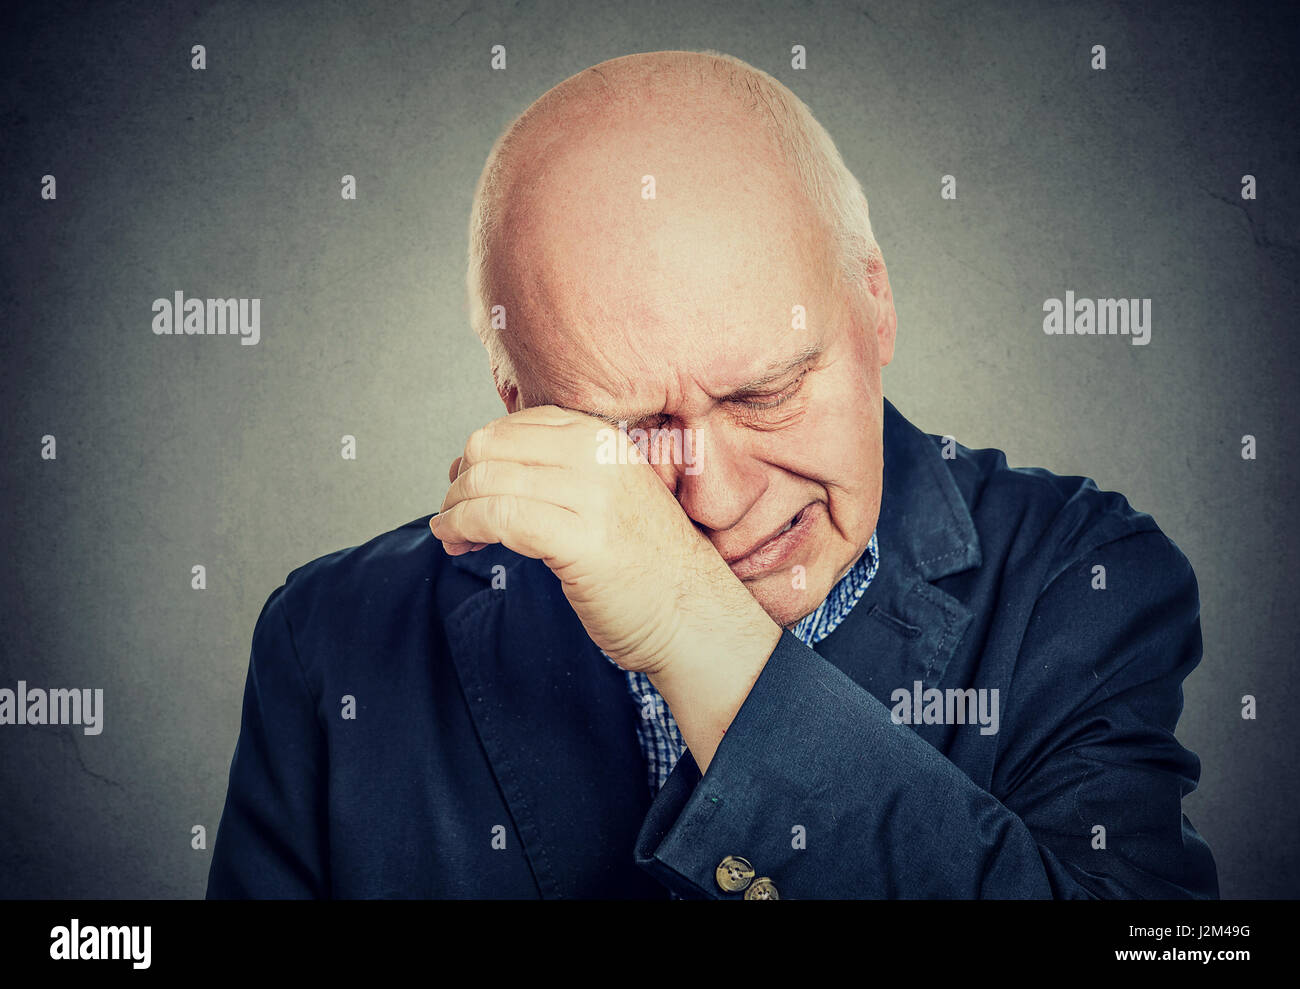 Sad senior man lonely grandfather, depressed crying isolated on gray background Stock Photo